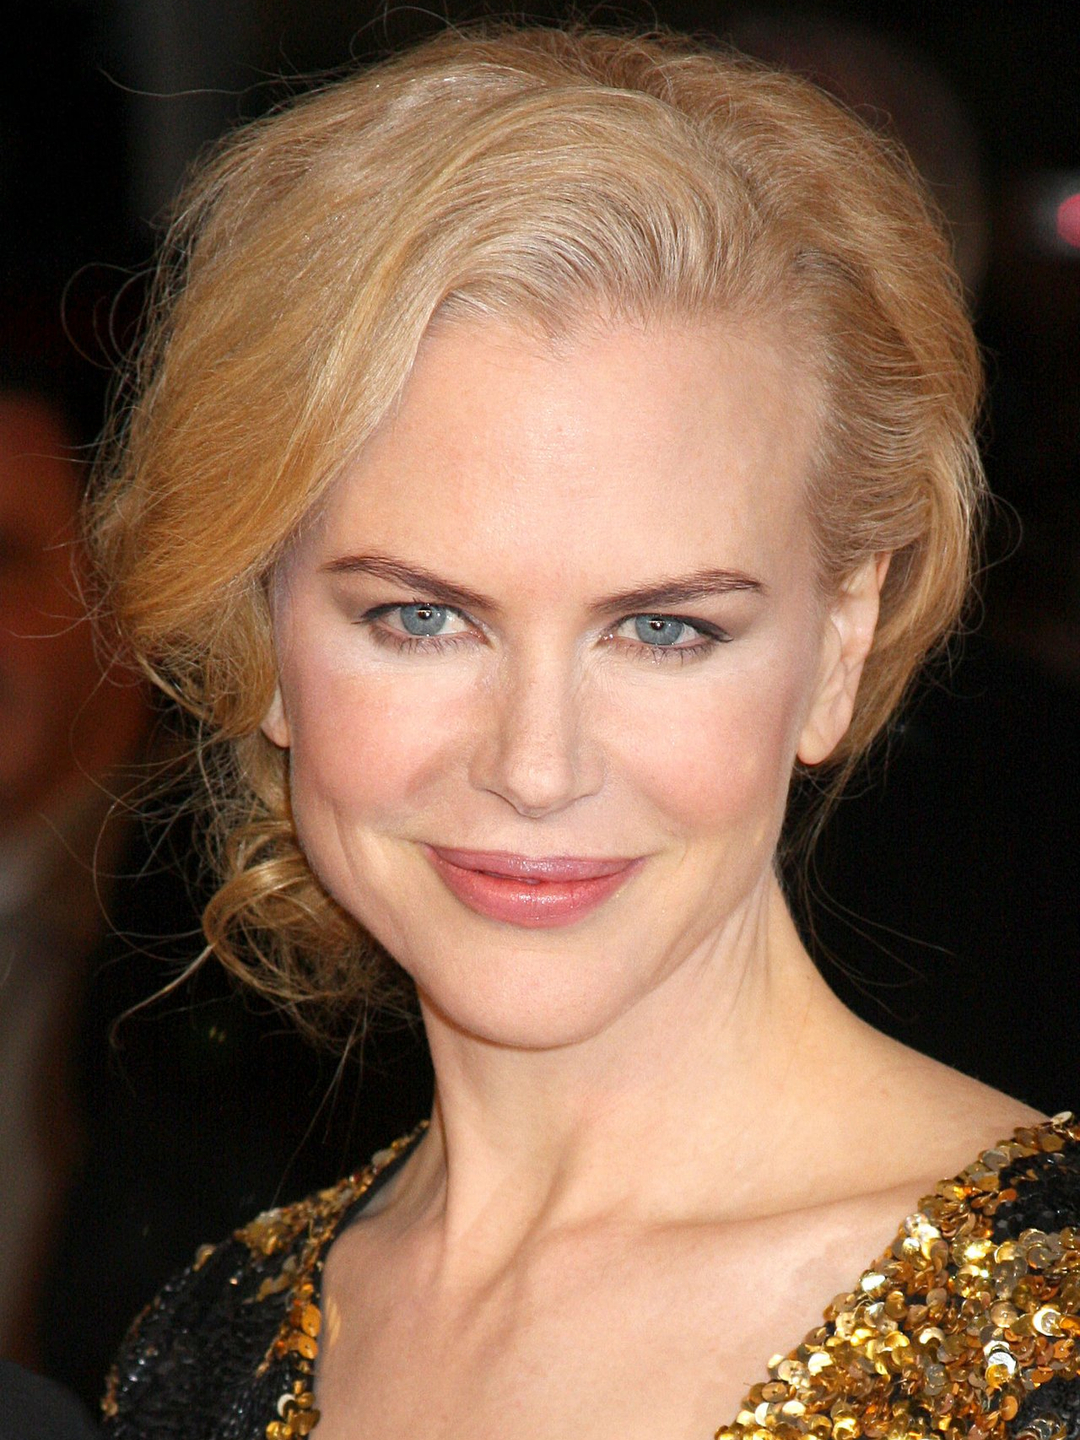 Nicole Kidman young age